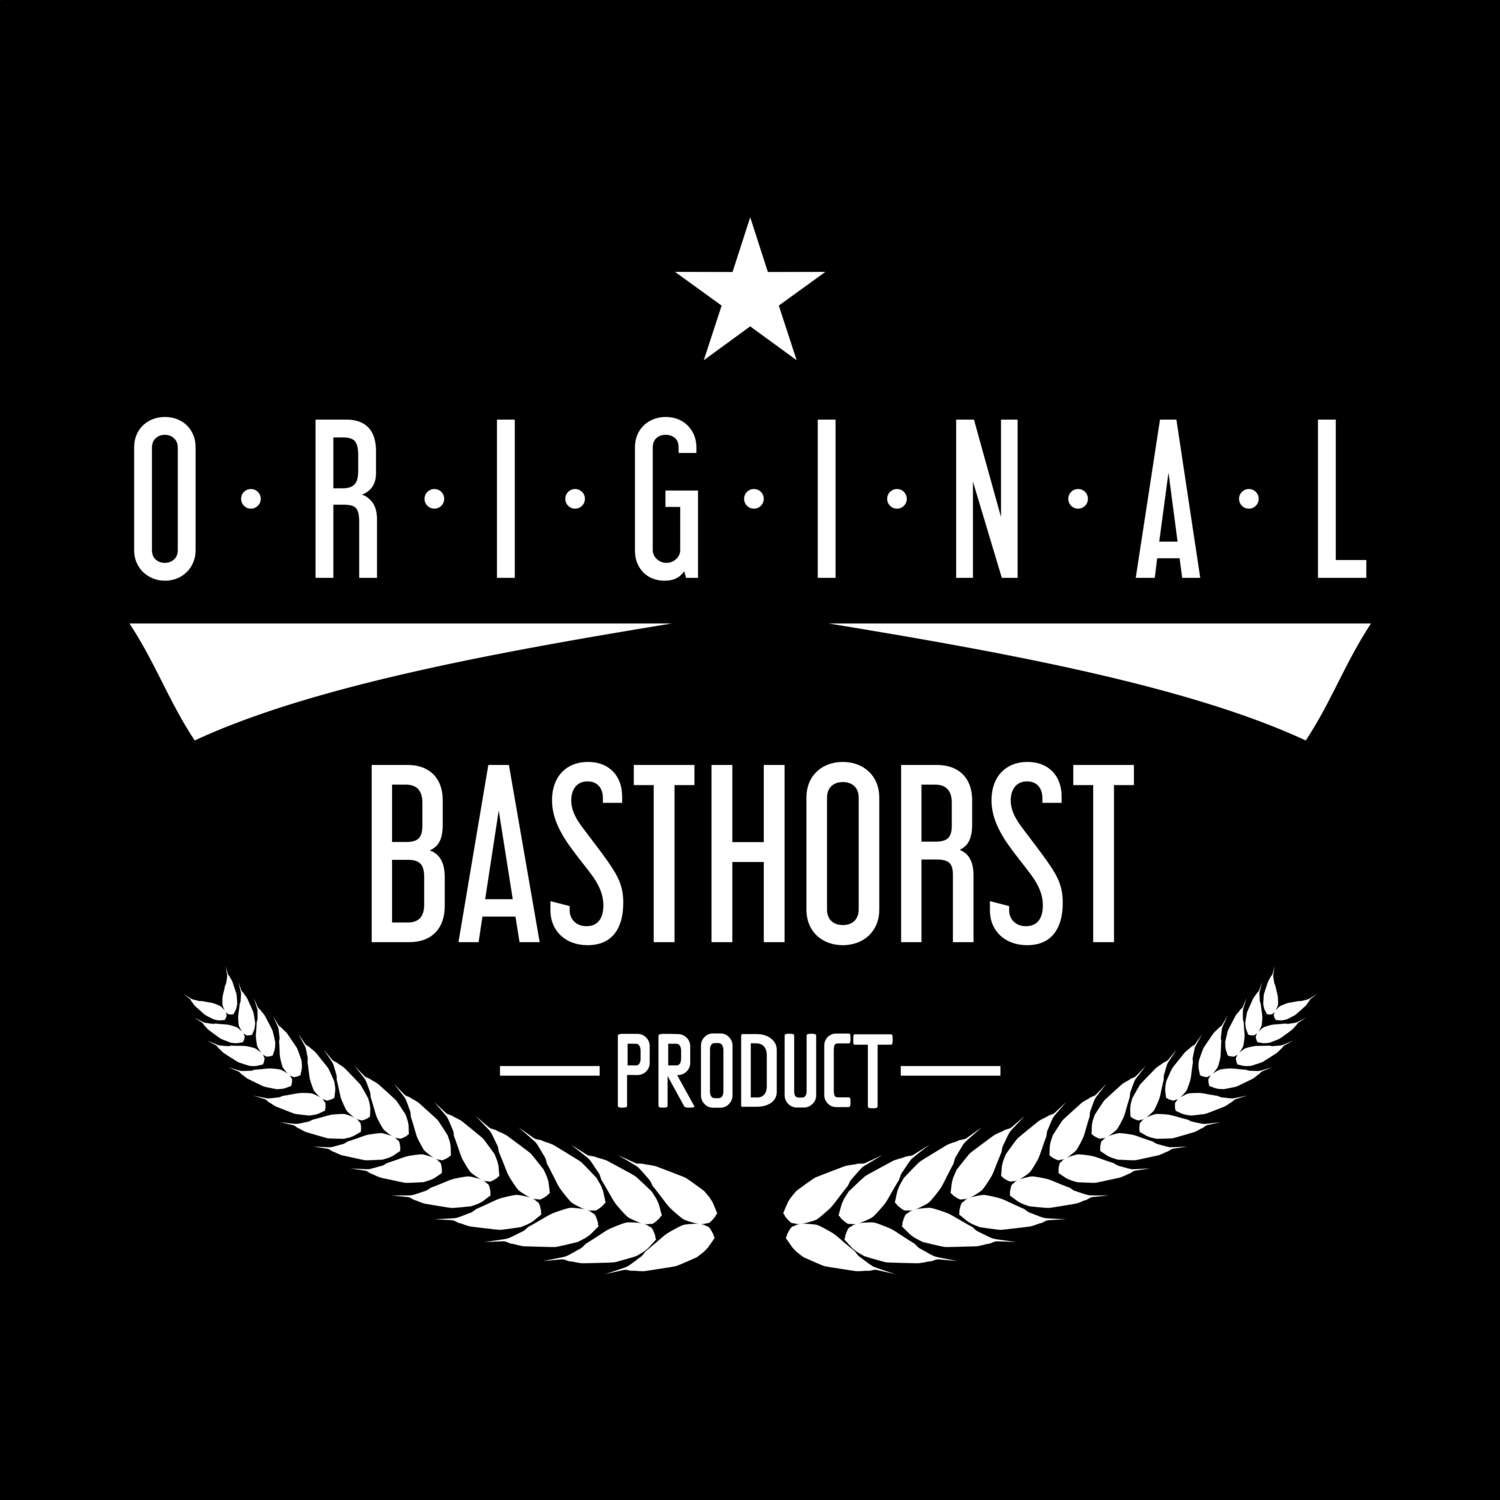 Basthorst T-Shirt »Original Product«